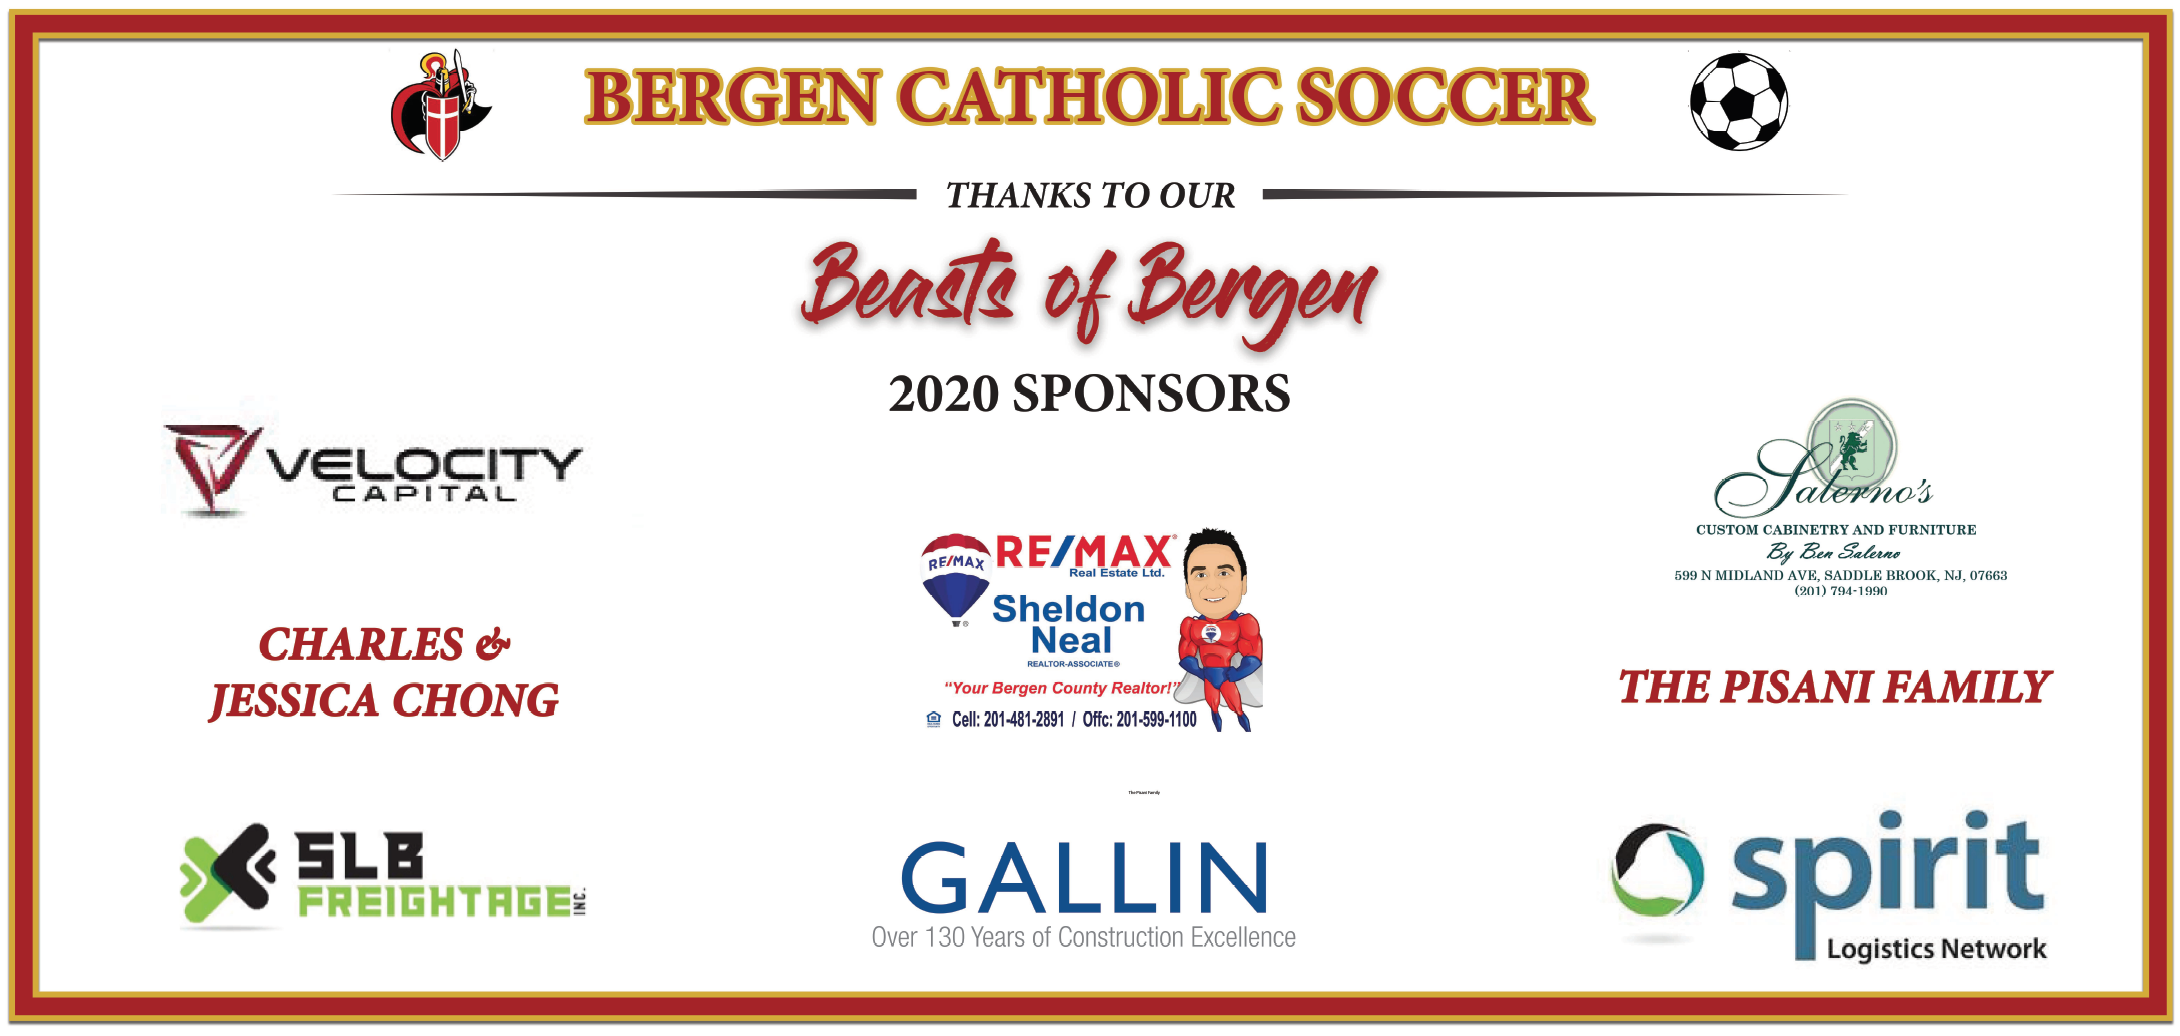 Soccer Bergen Catholic